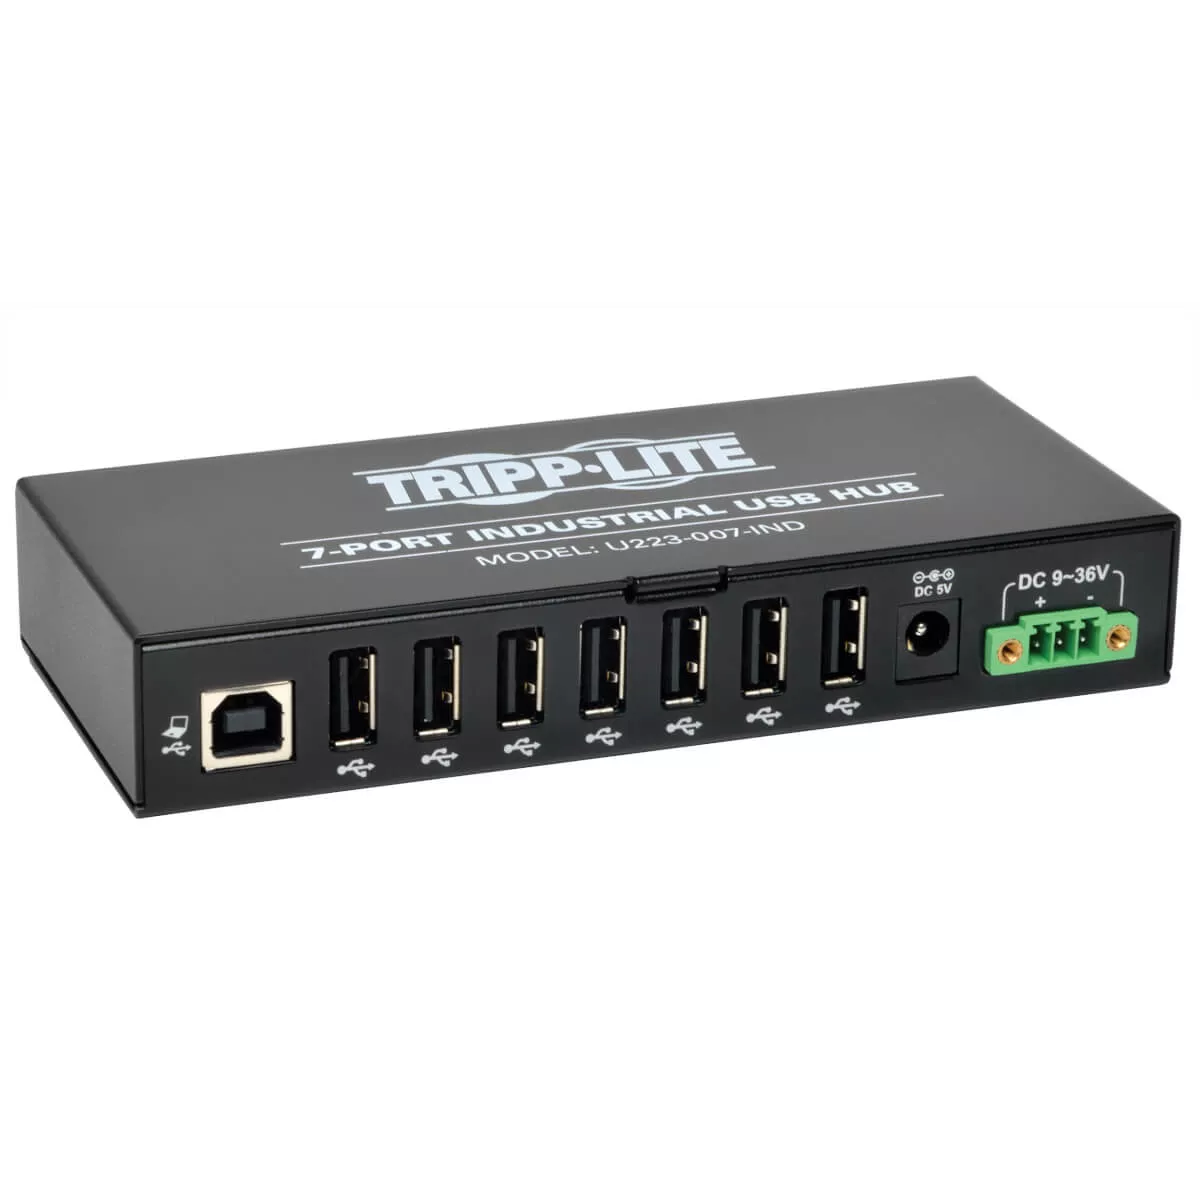 Achat EATON TRIPPLITE 7-Port Industrial-Grade USB 2.0 Hub 15kV au meilleur prix